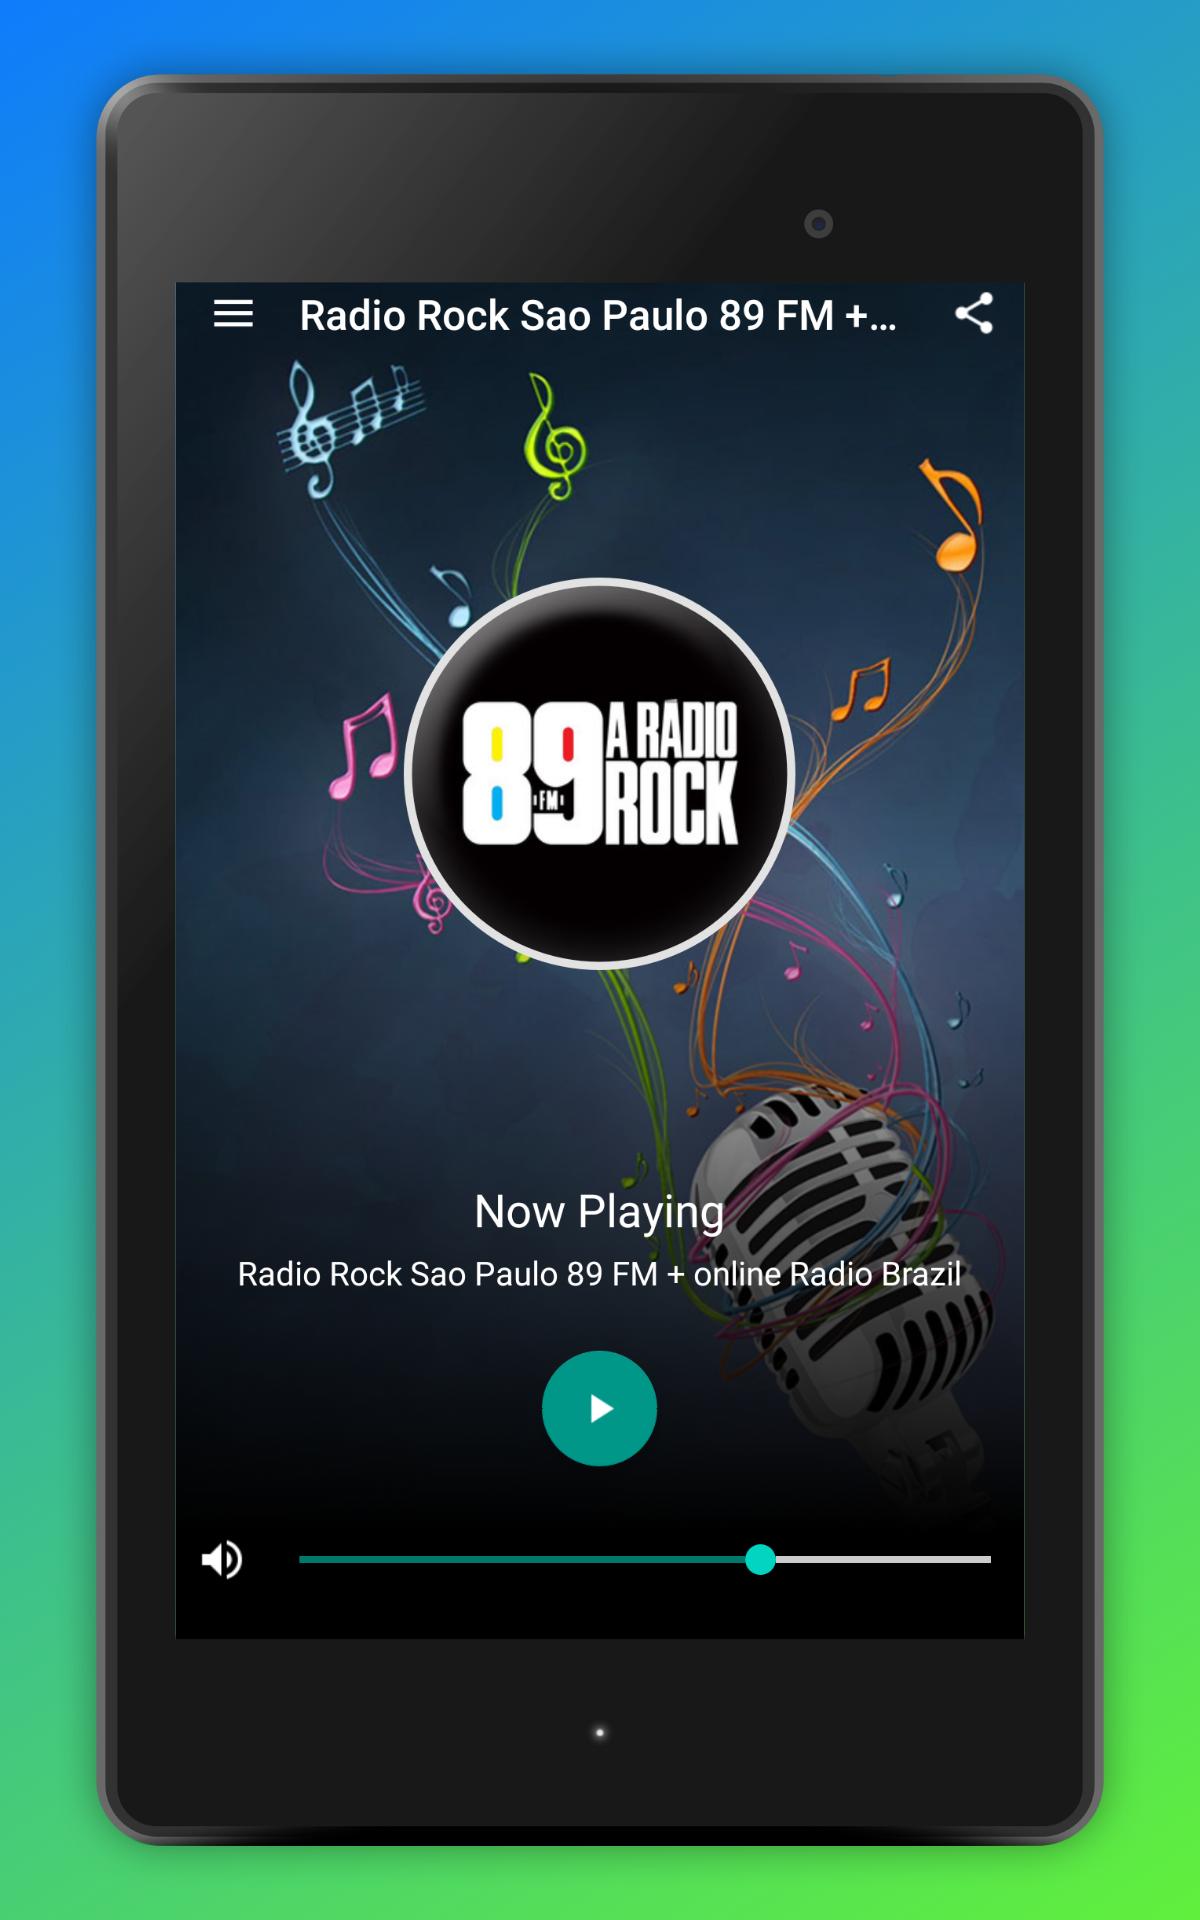 Radio Rock Sao Paulo 89 FM Live App Radio Brazil for Android - APK Download